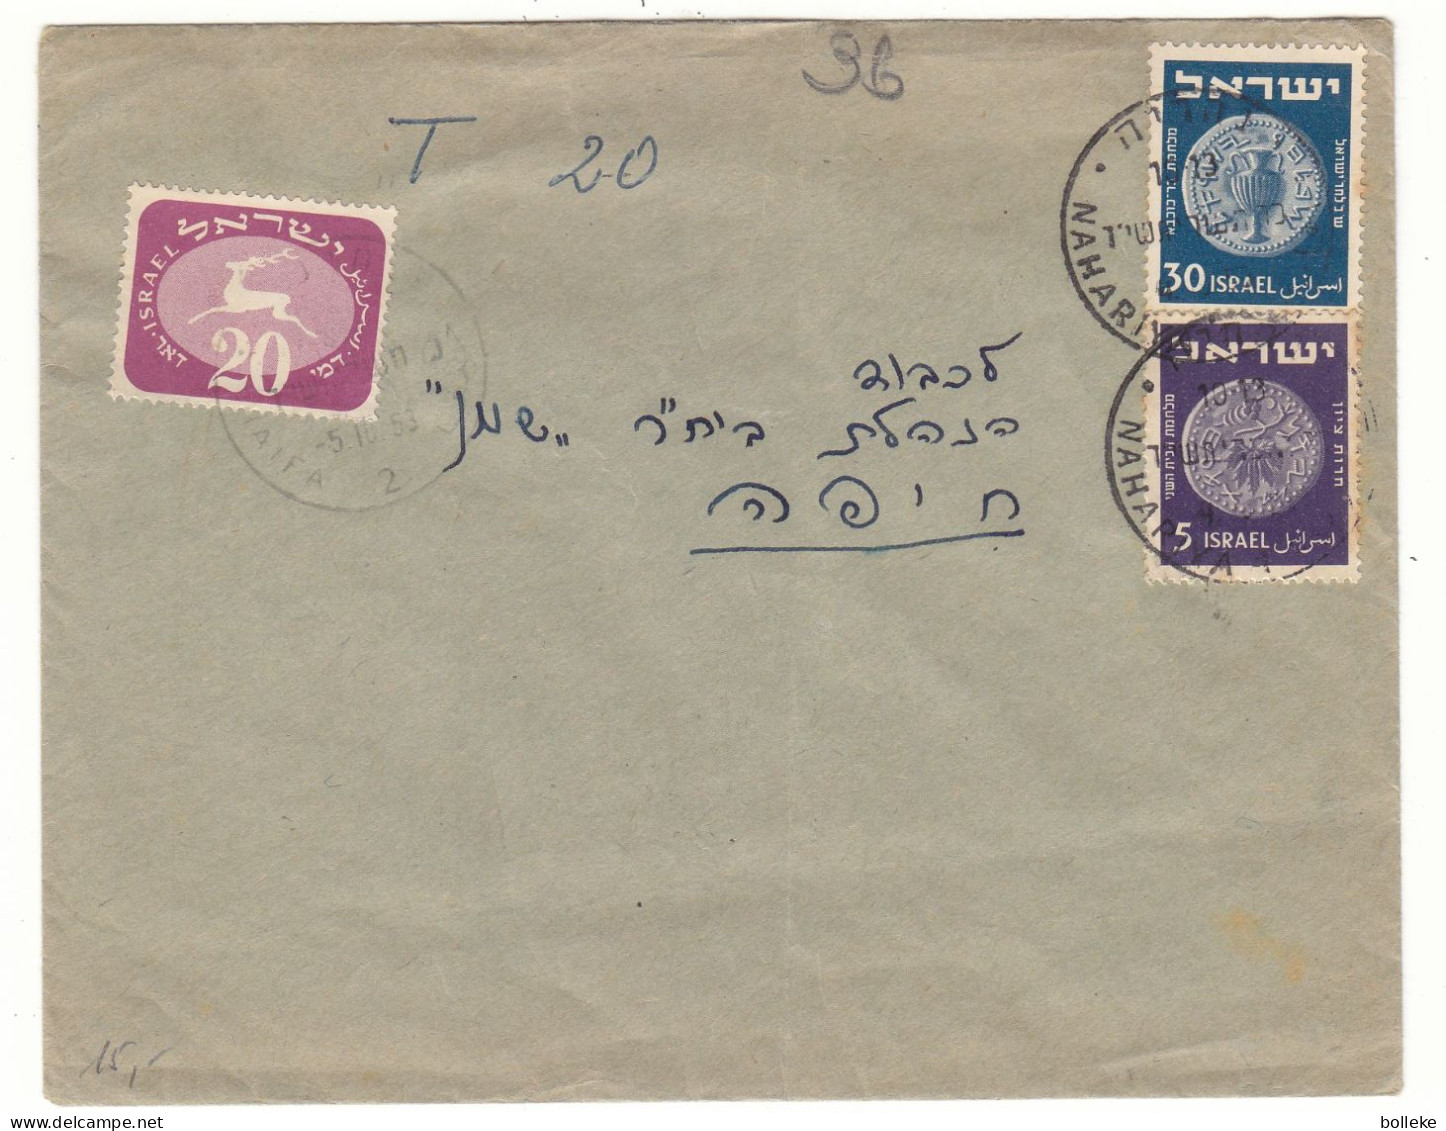 Israël - Lettre Taxée De 1953 - Oblit Nahariya - Monnaies - Taxée De 20 - Covers & Documents